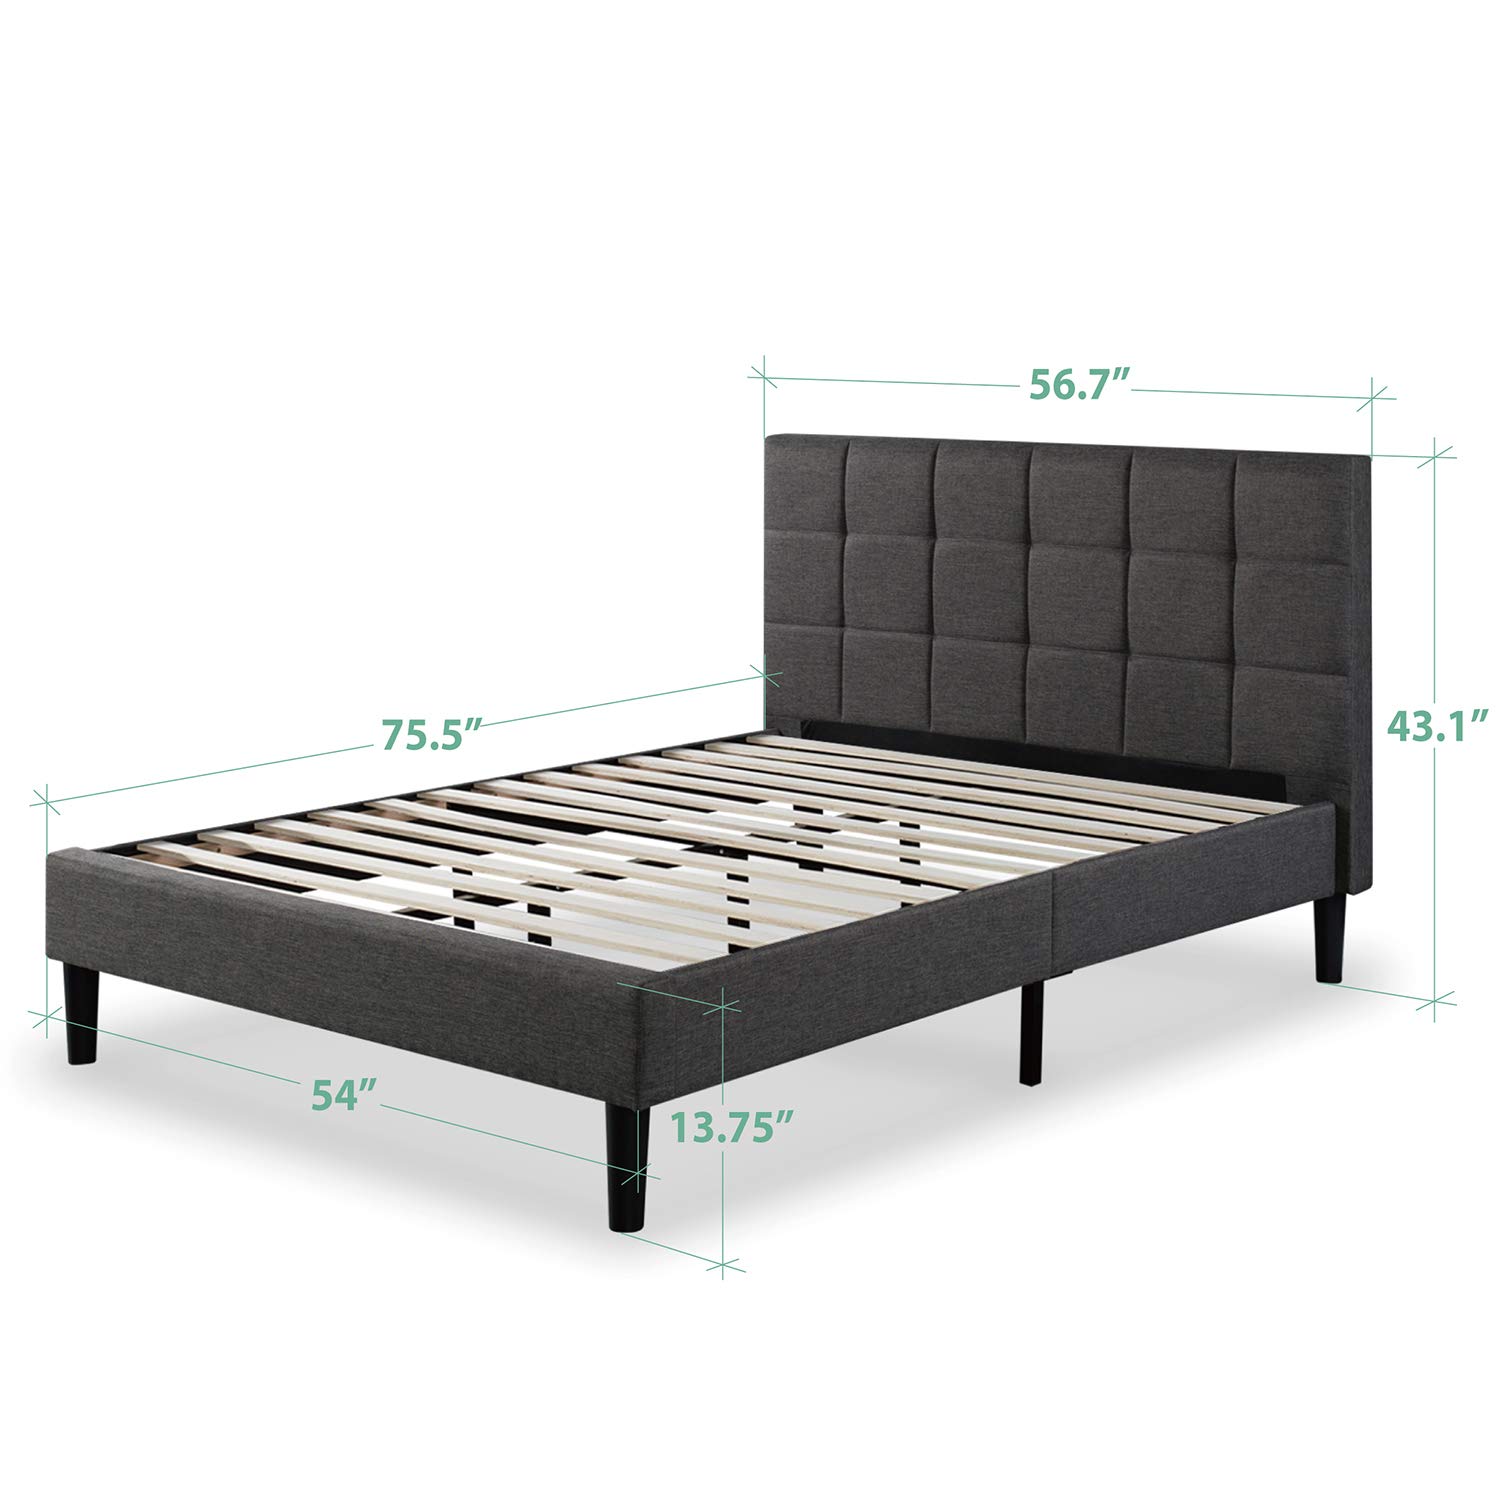 ZINUS Lottie Upholstered Platform Bed Frame / Mattress Foundation / Wood Slat Support / No Box Spring Needed / Easy Assembly, Grey, Full